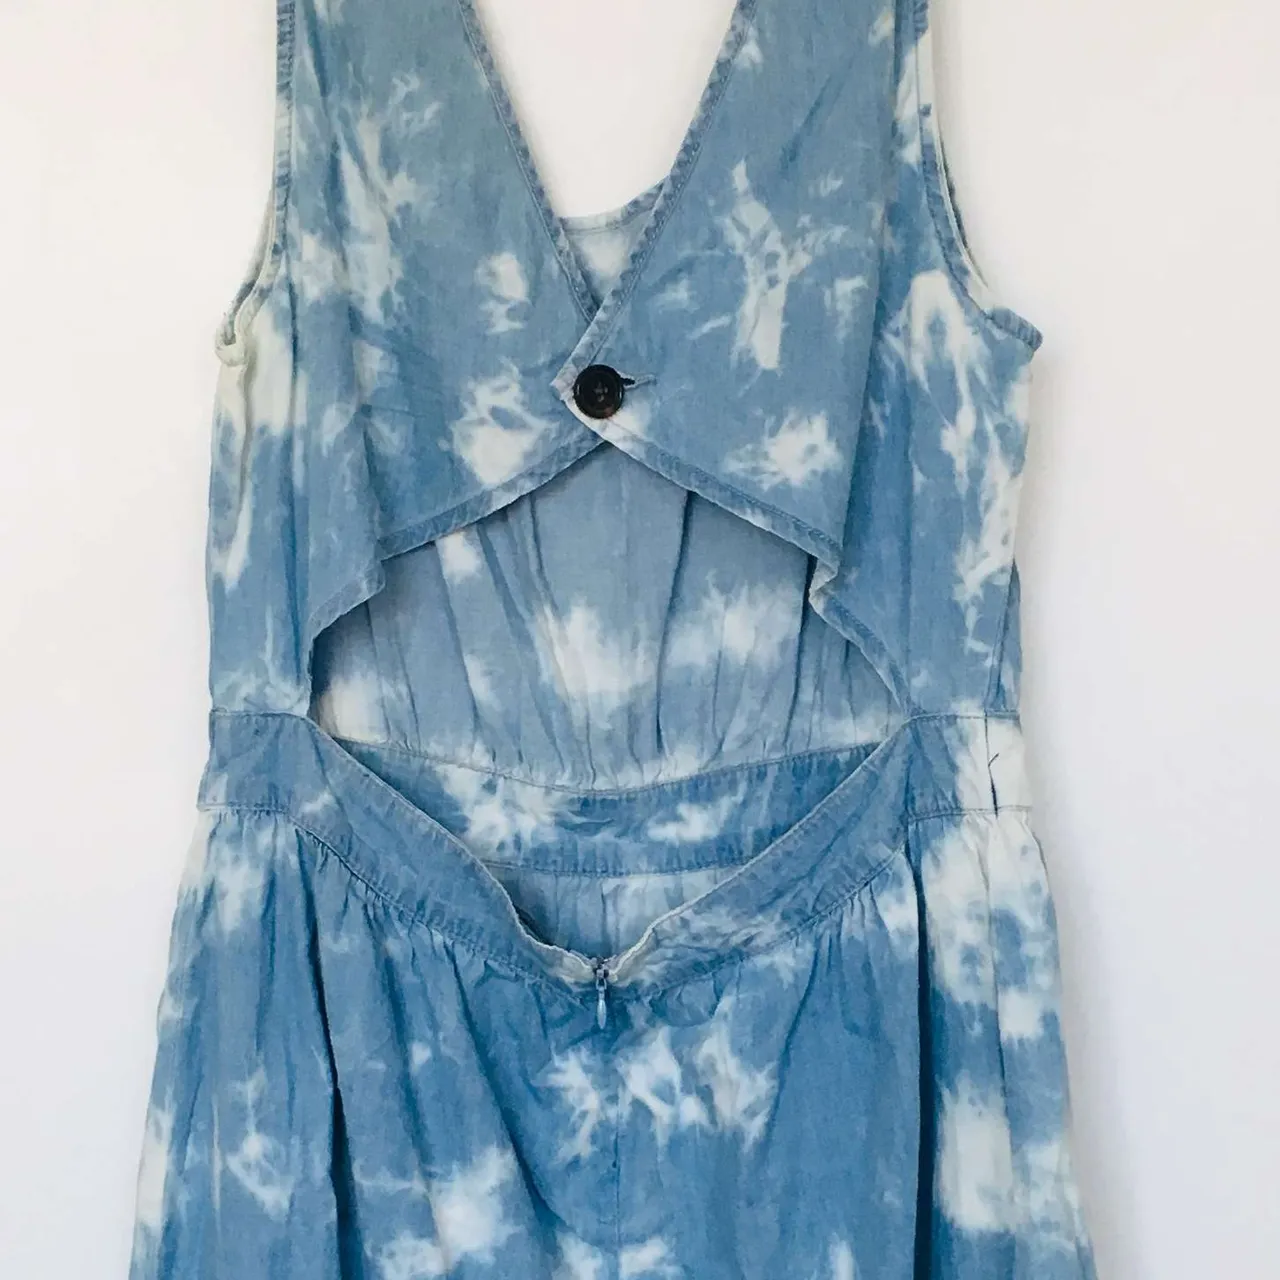 Open-Back Acid Wash Dress (L/XL) photo 1